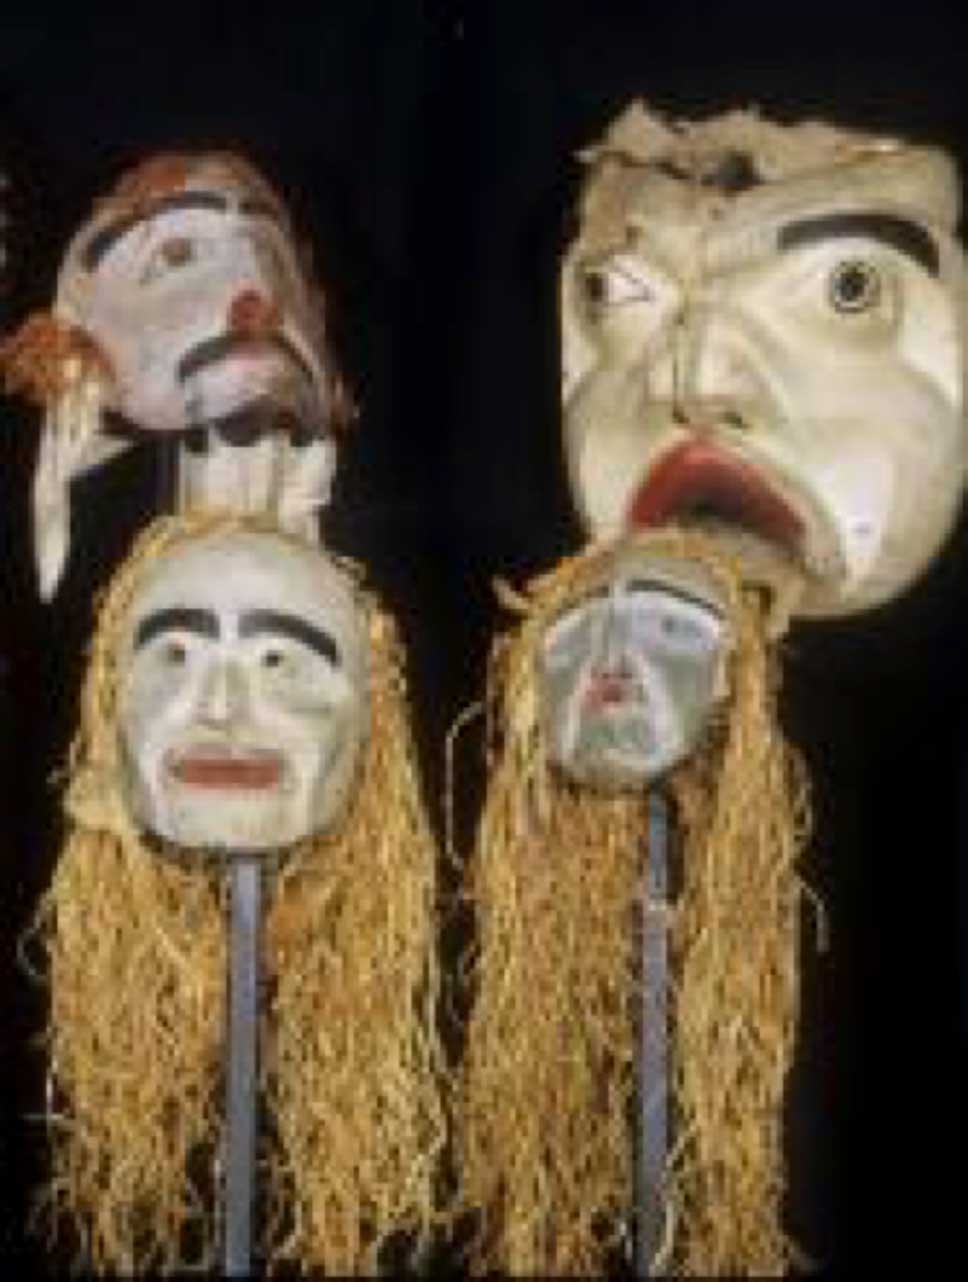 Colour photograph shows a group of four forest spirit masks shot against black background